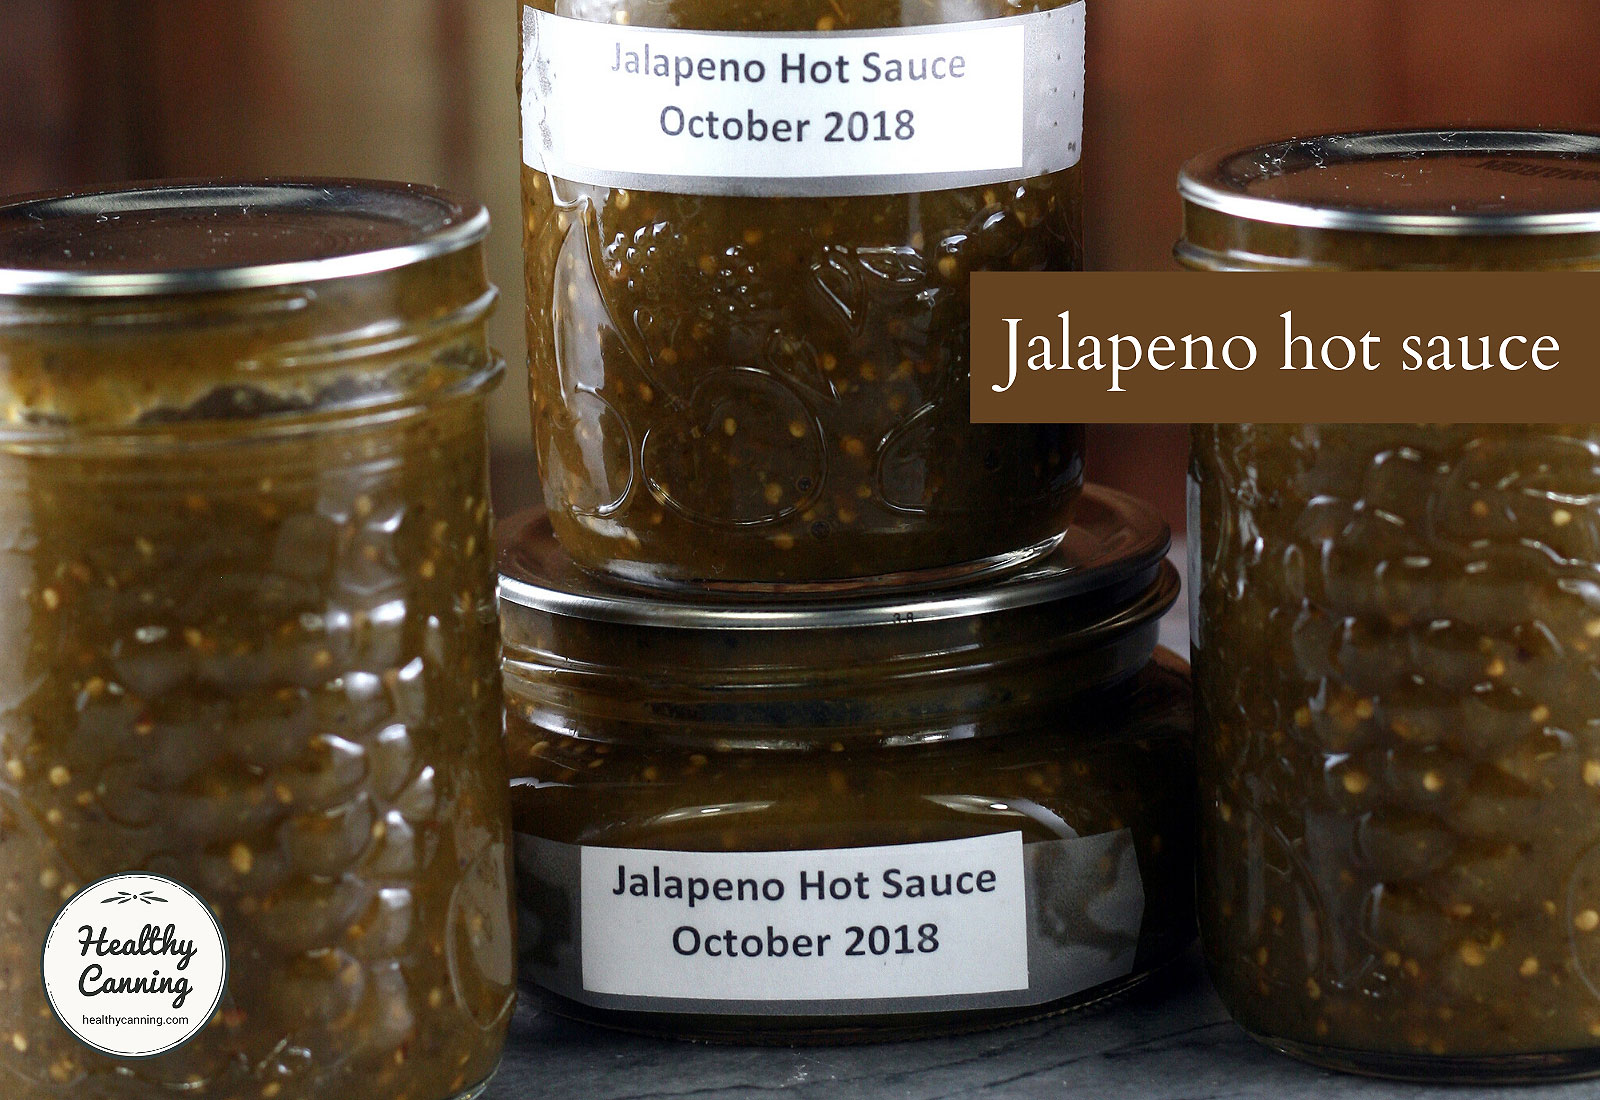 Jalapeno hot sauce in jars